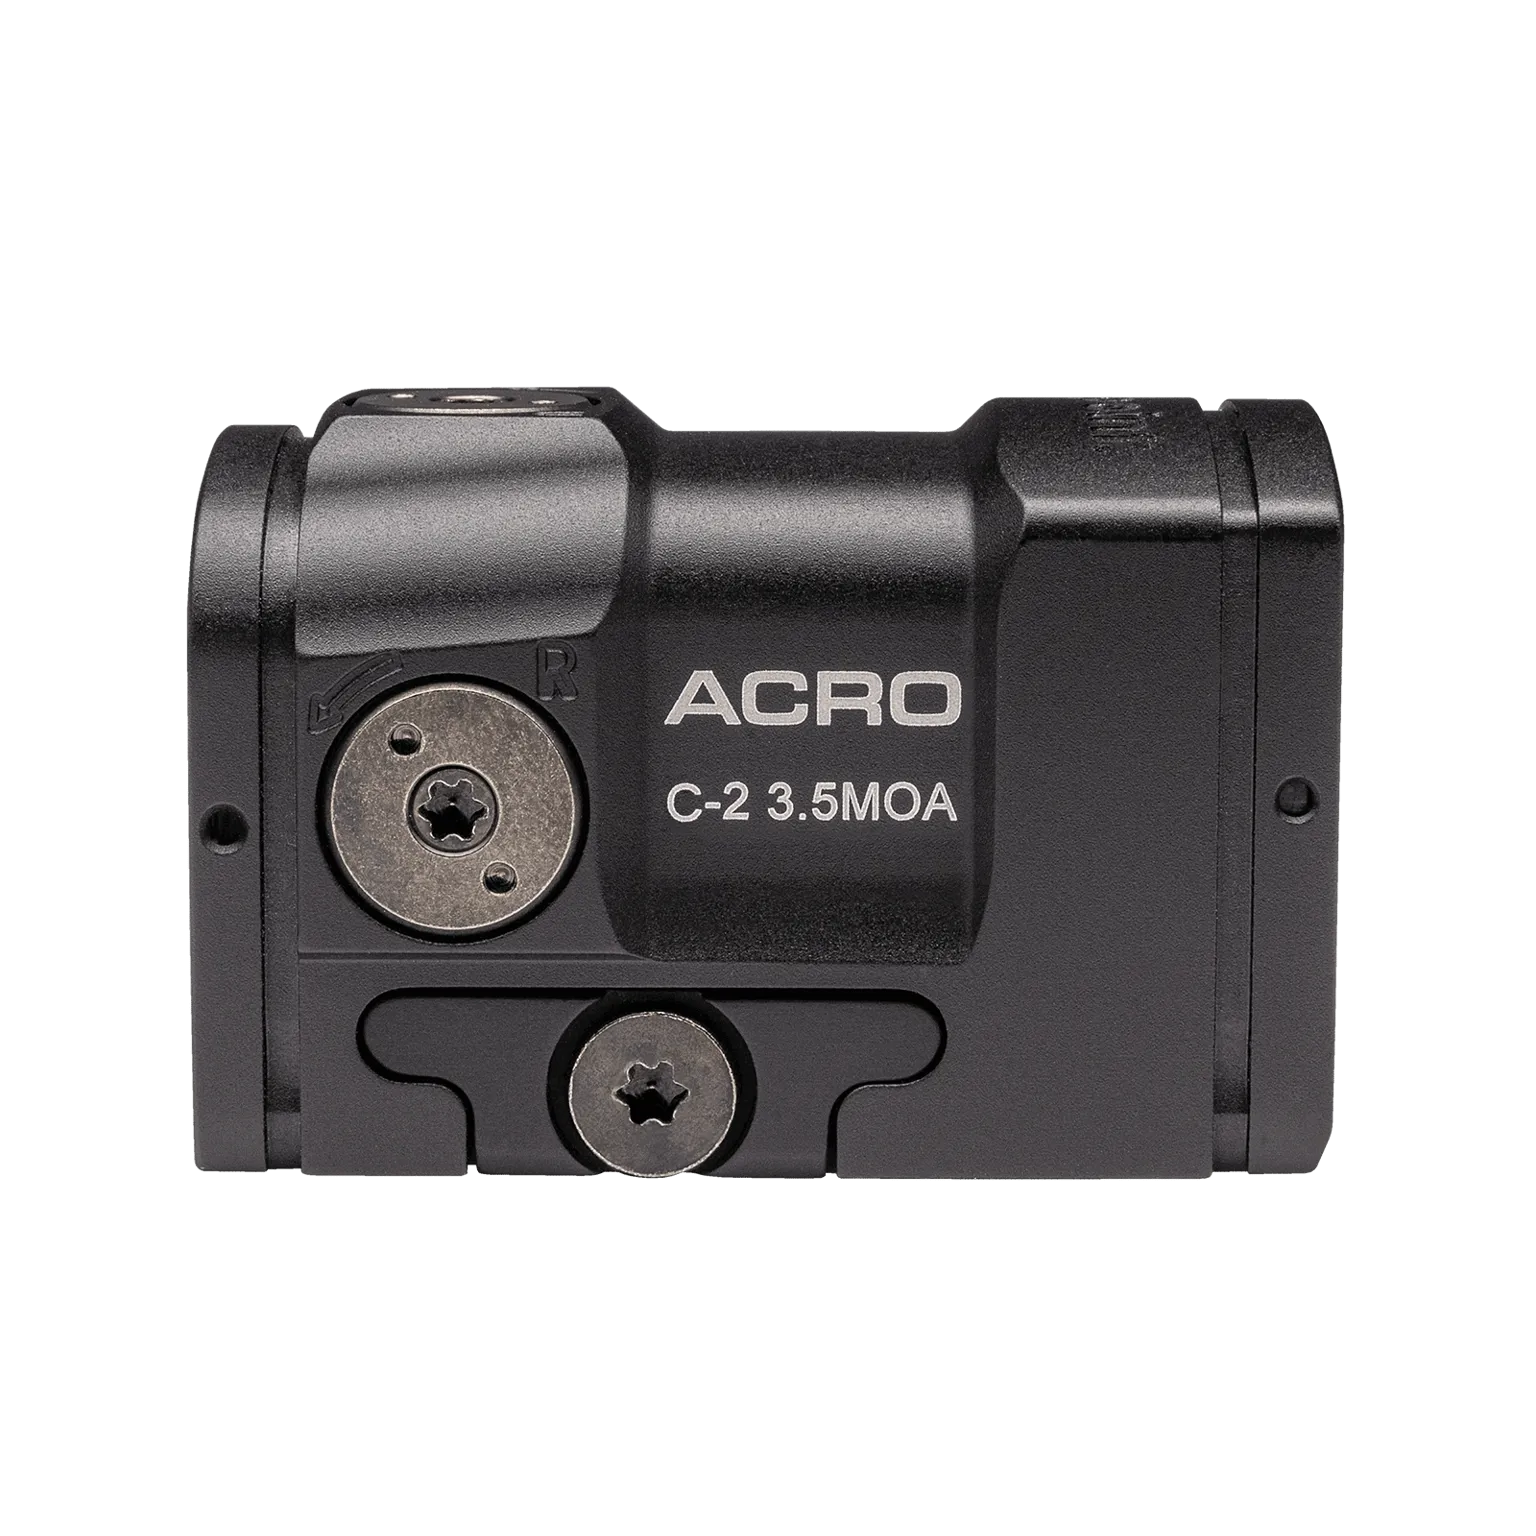 Acro C-2™ 3.5 MOA - Rotpunktvisier mit integrierter Acro™ Schnittstelle - 4